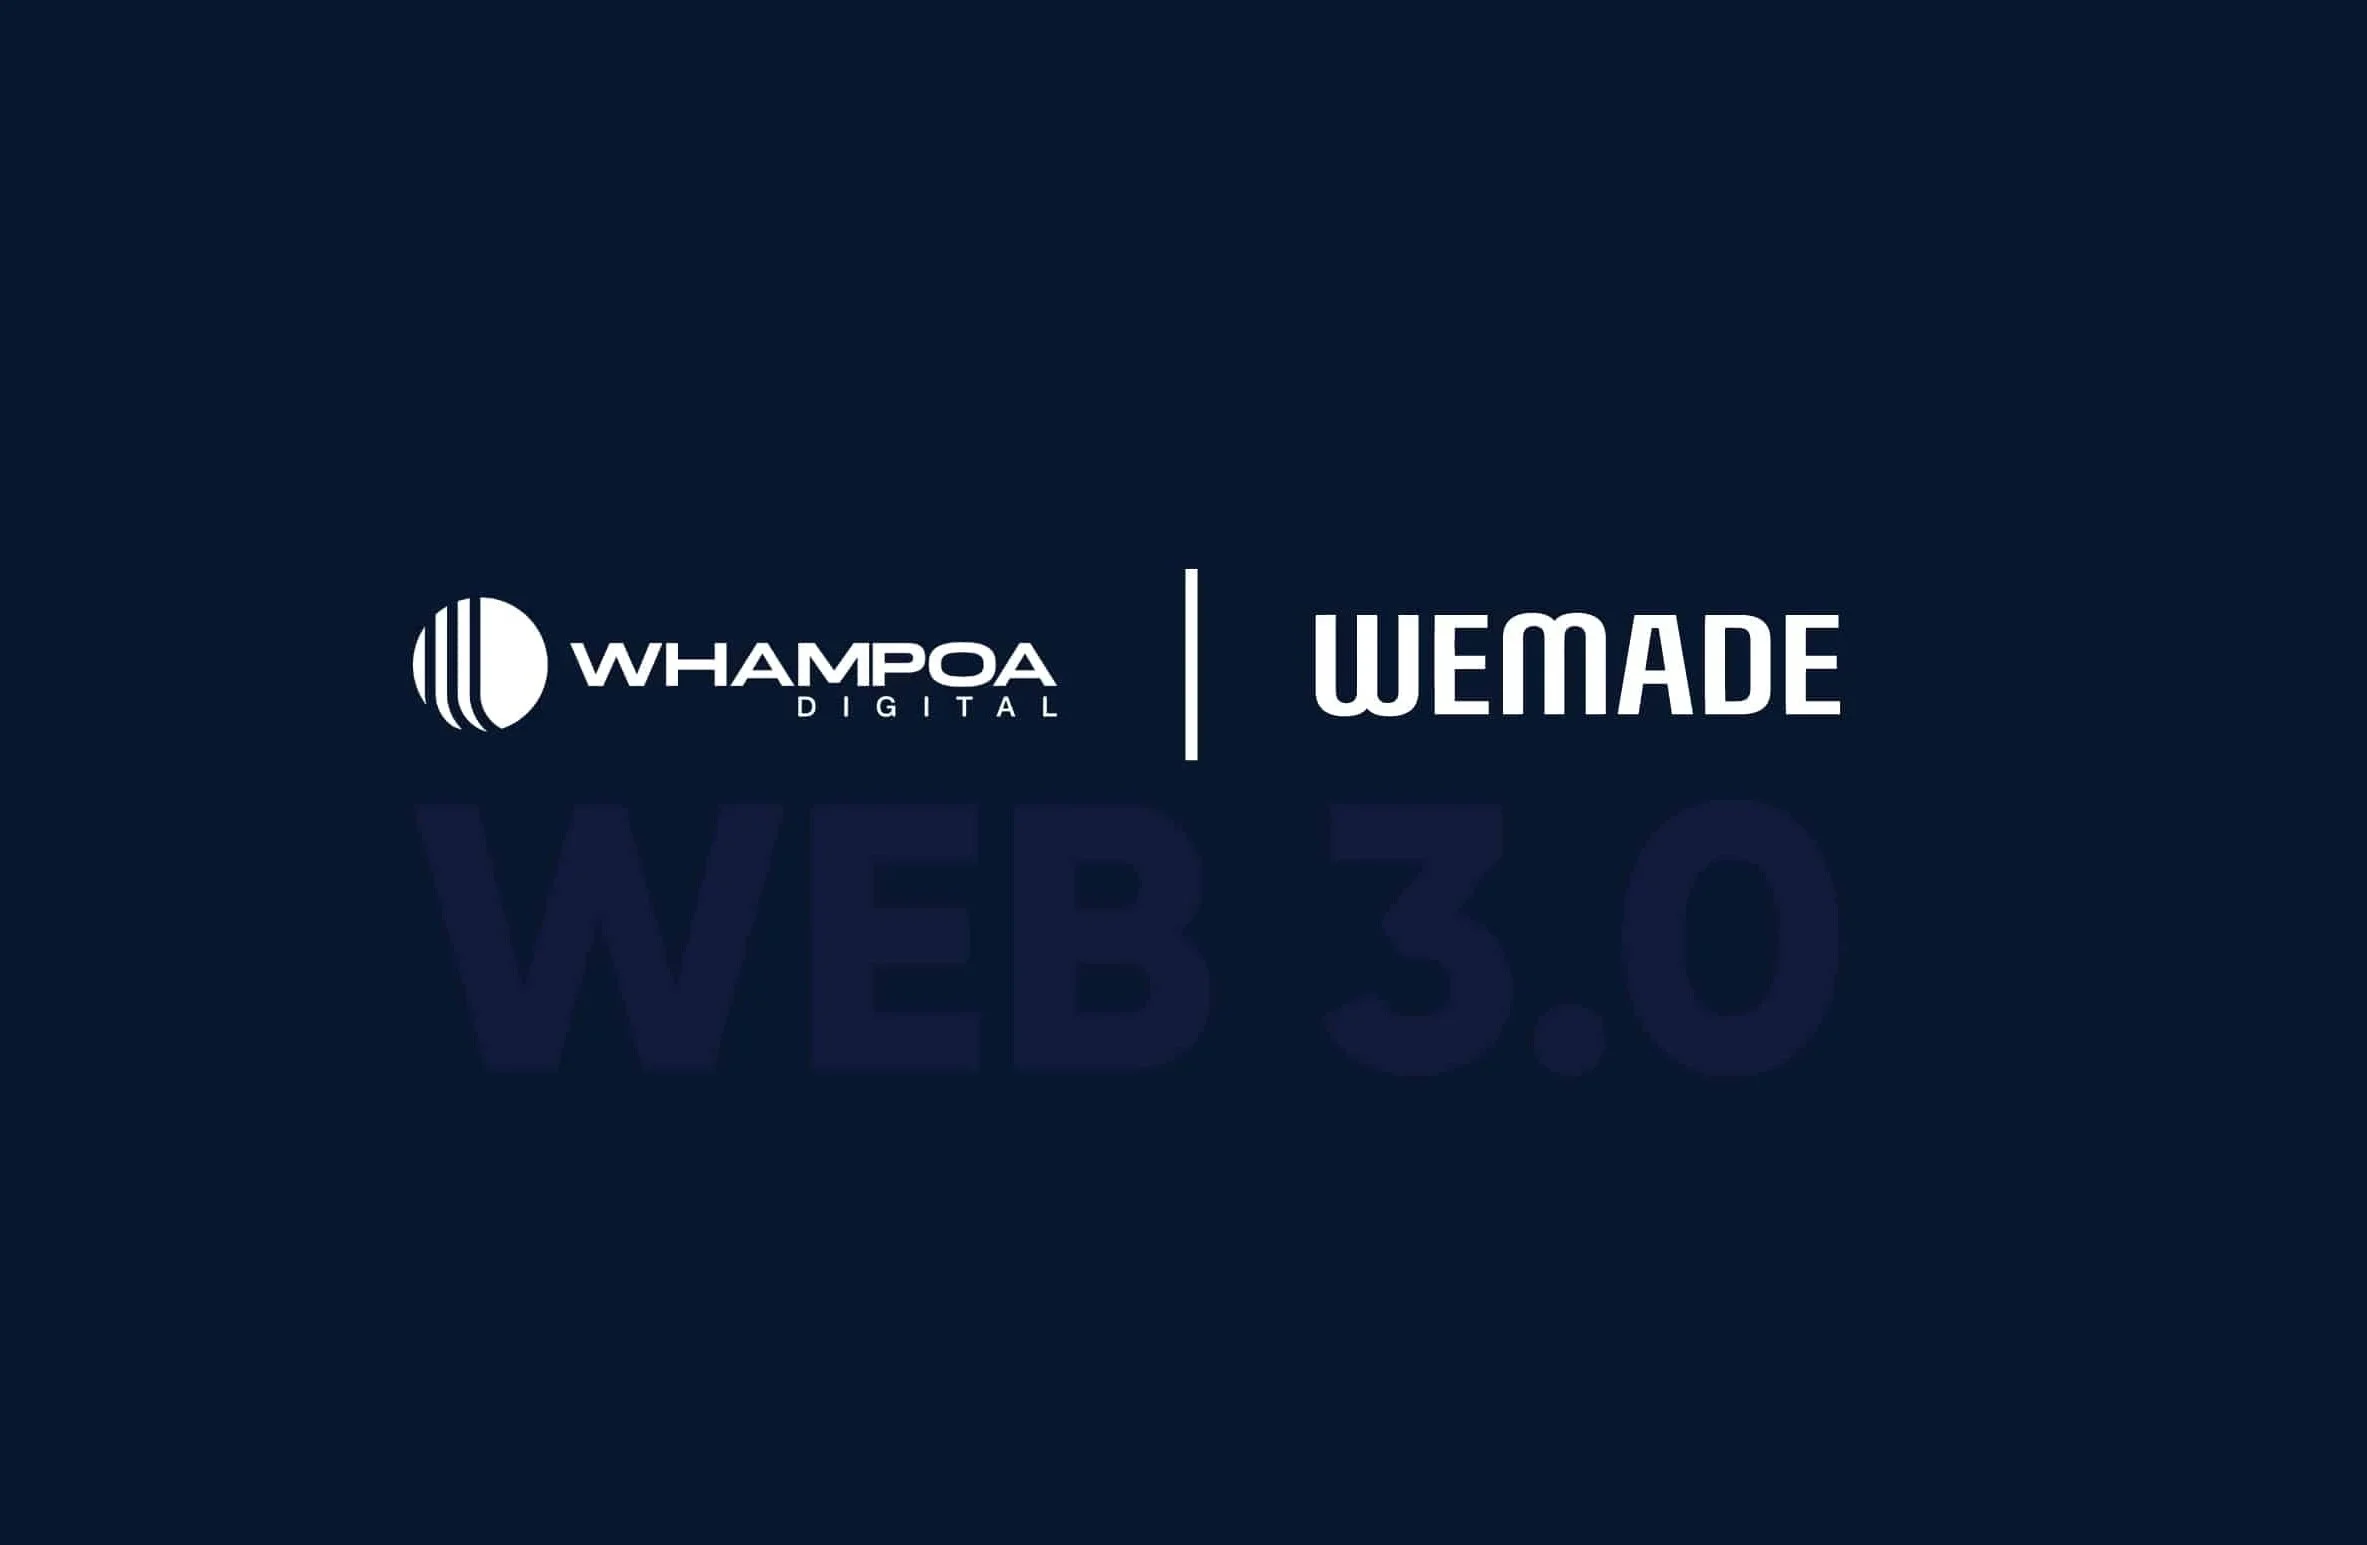 Wemade Web3 ਗੇਮਿੰਗ ਪ੍ਰੋਜੈਕਟਾਂ ਲਈ Whampoa ਡਿਜੀਟਲ ਨਾਲ ਸਹਿਯੋਗ ਕਰਦਾ ਹੈ